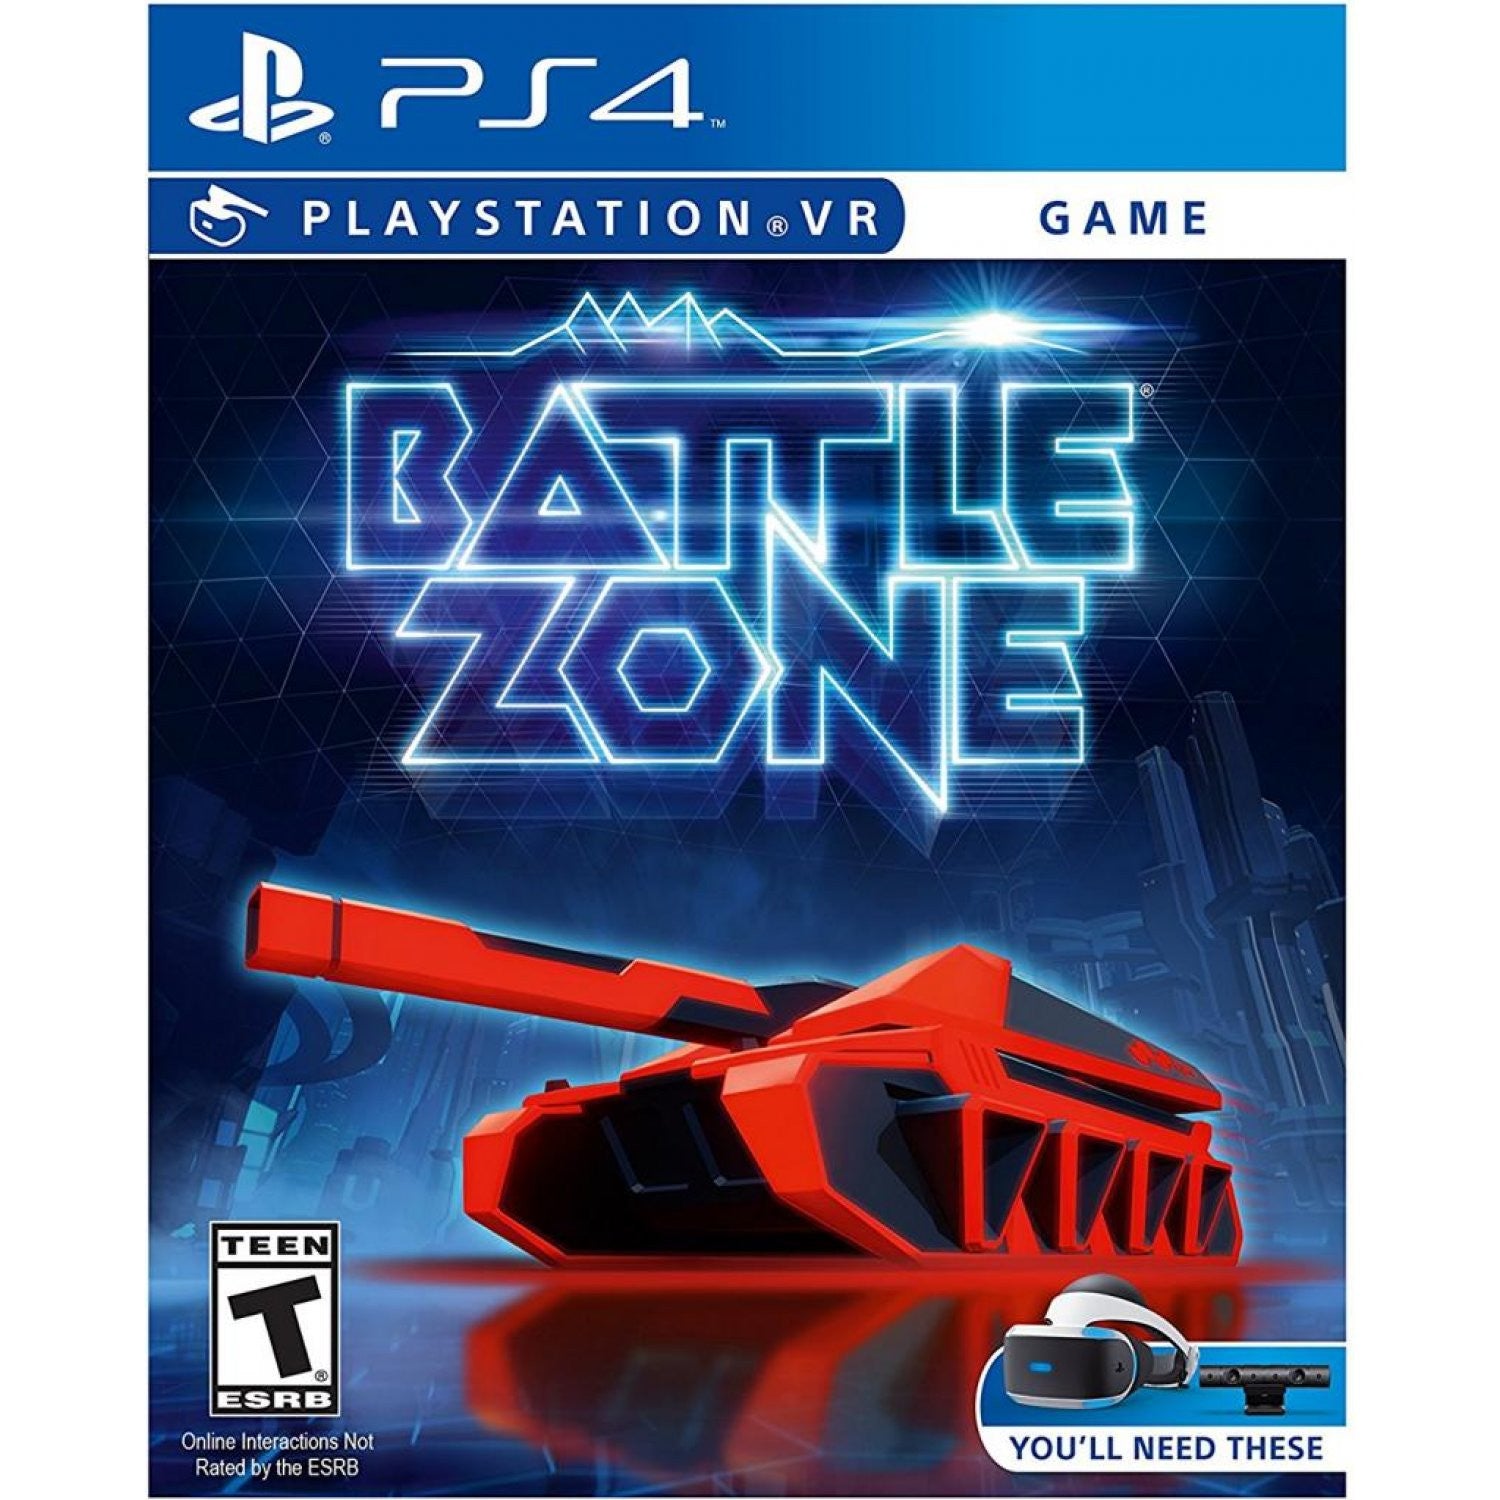 PS4 Battlezone VR